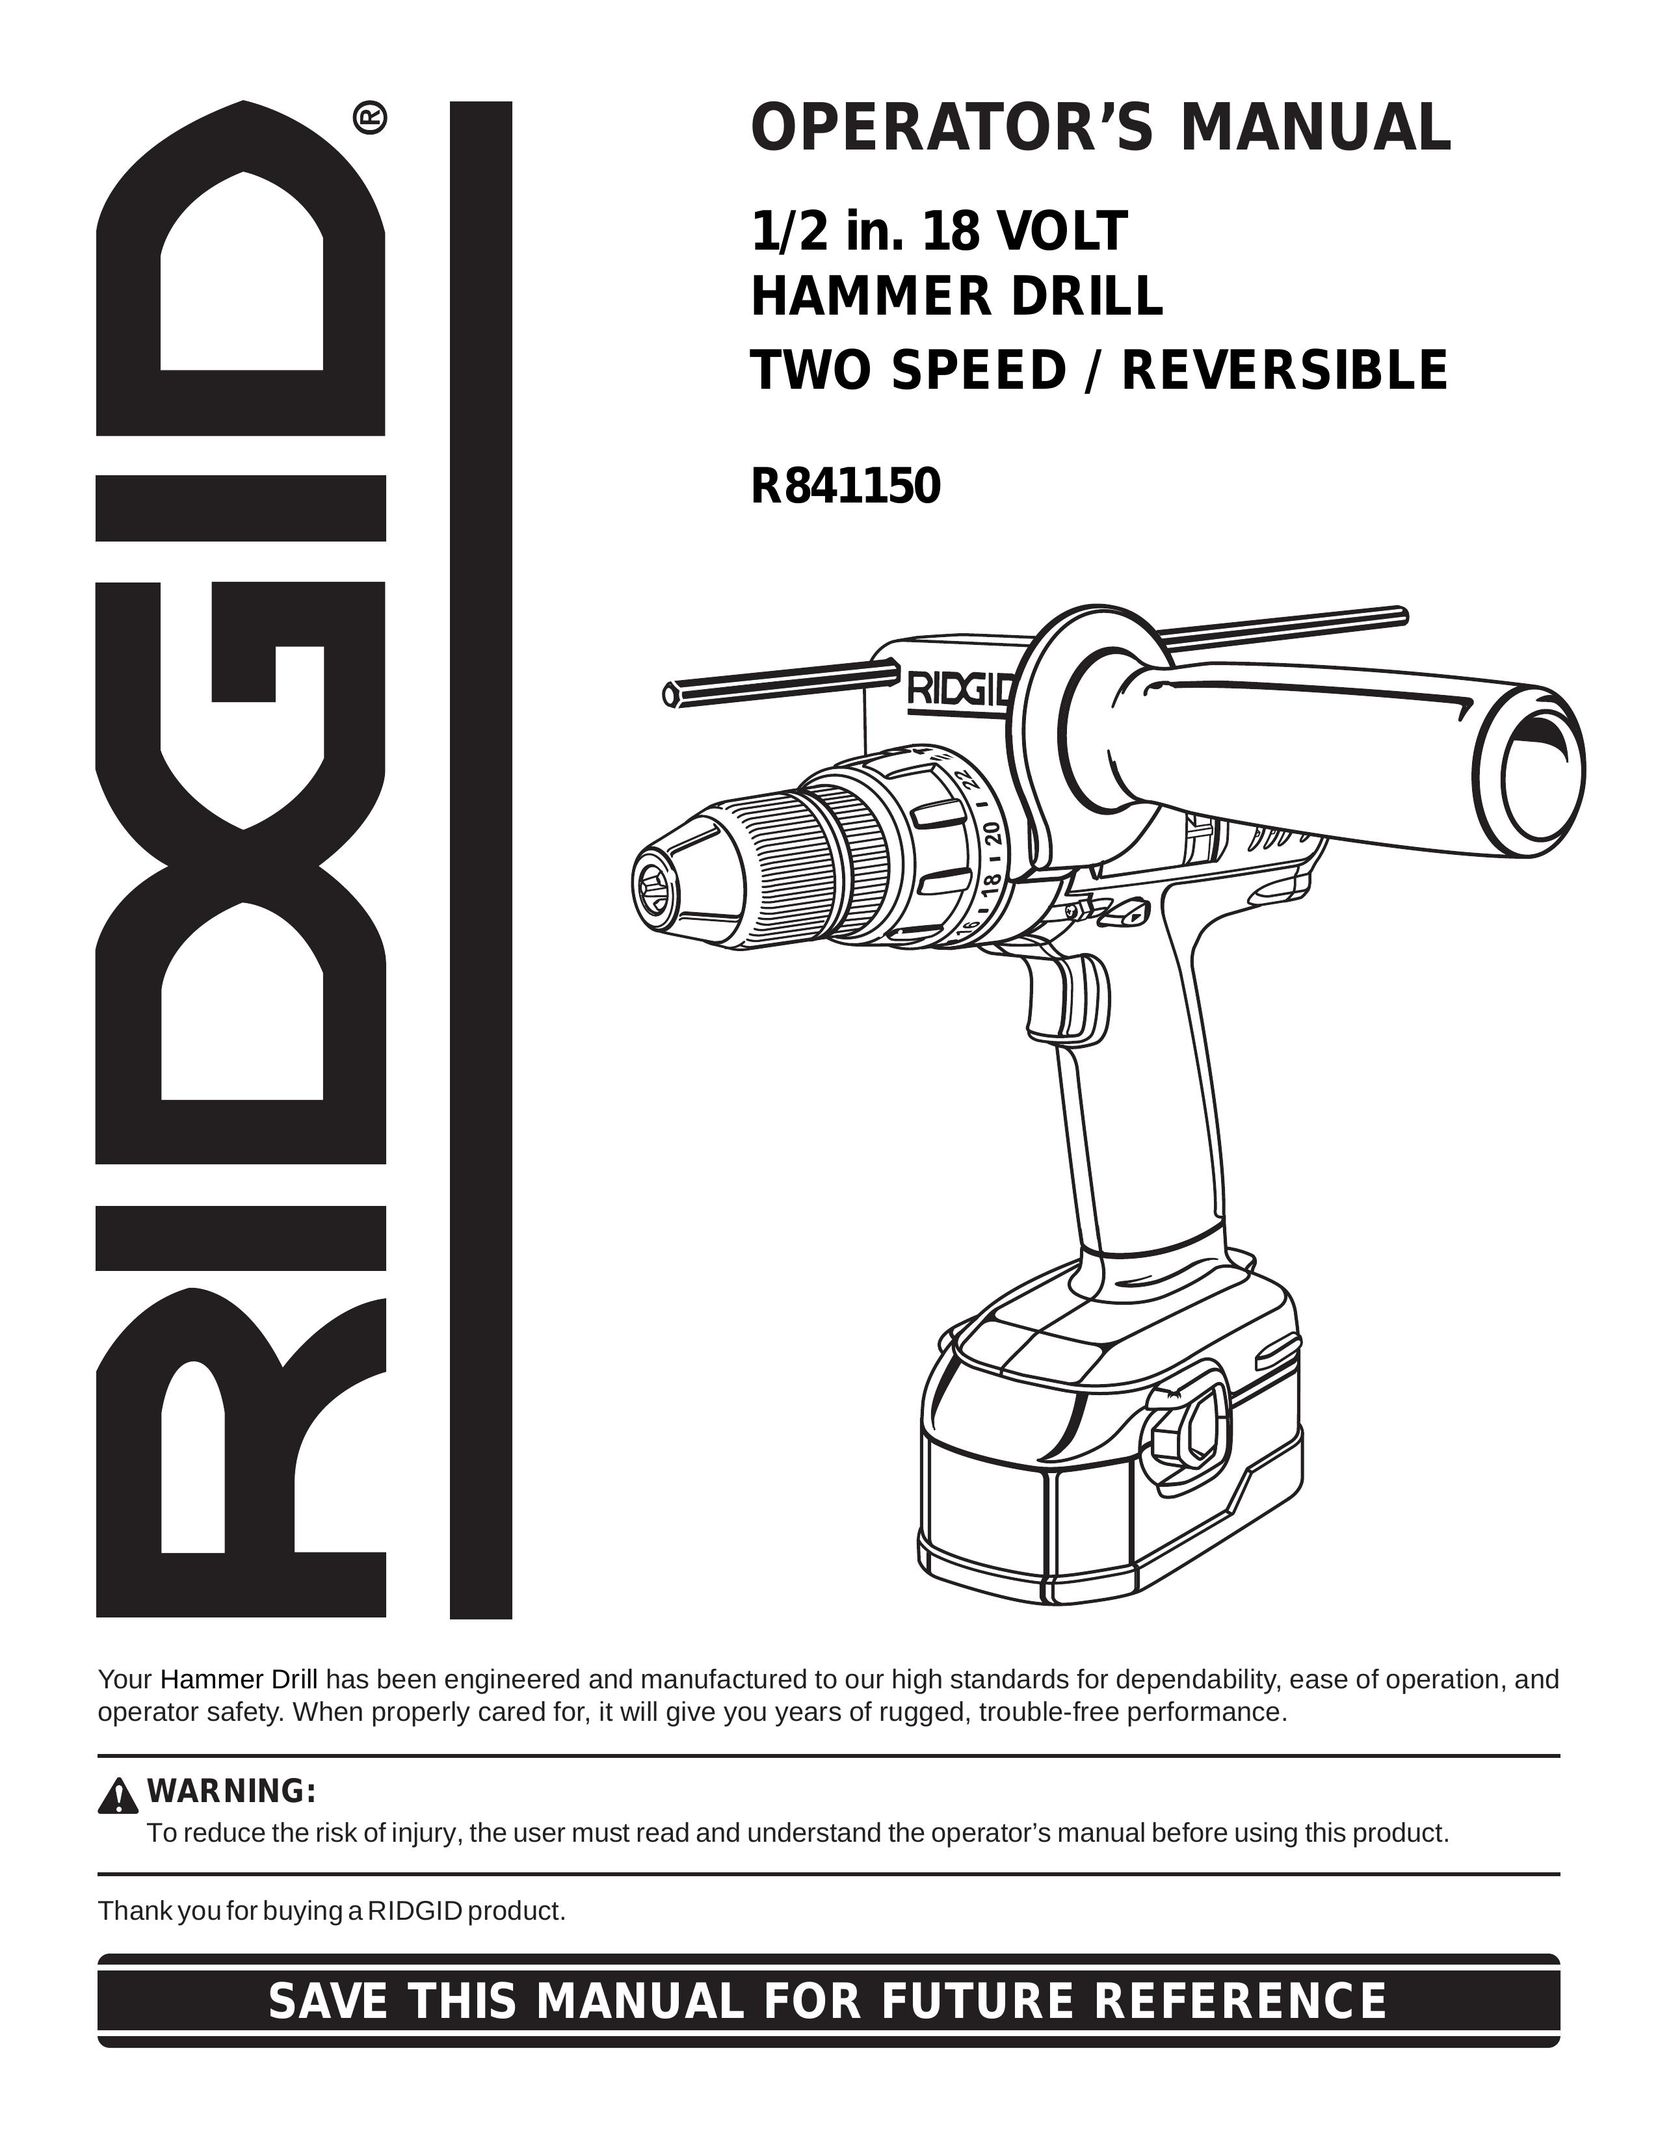 RIDGID R841150 Drill User Manual